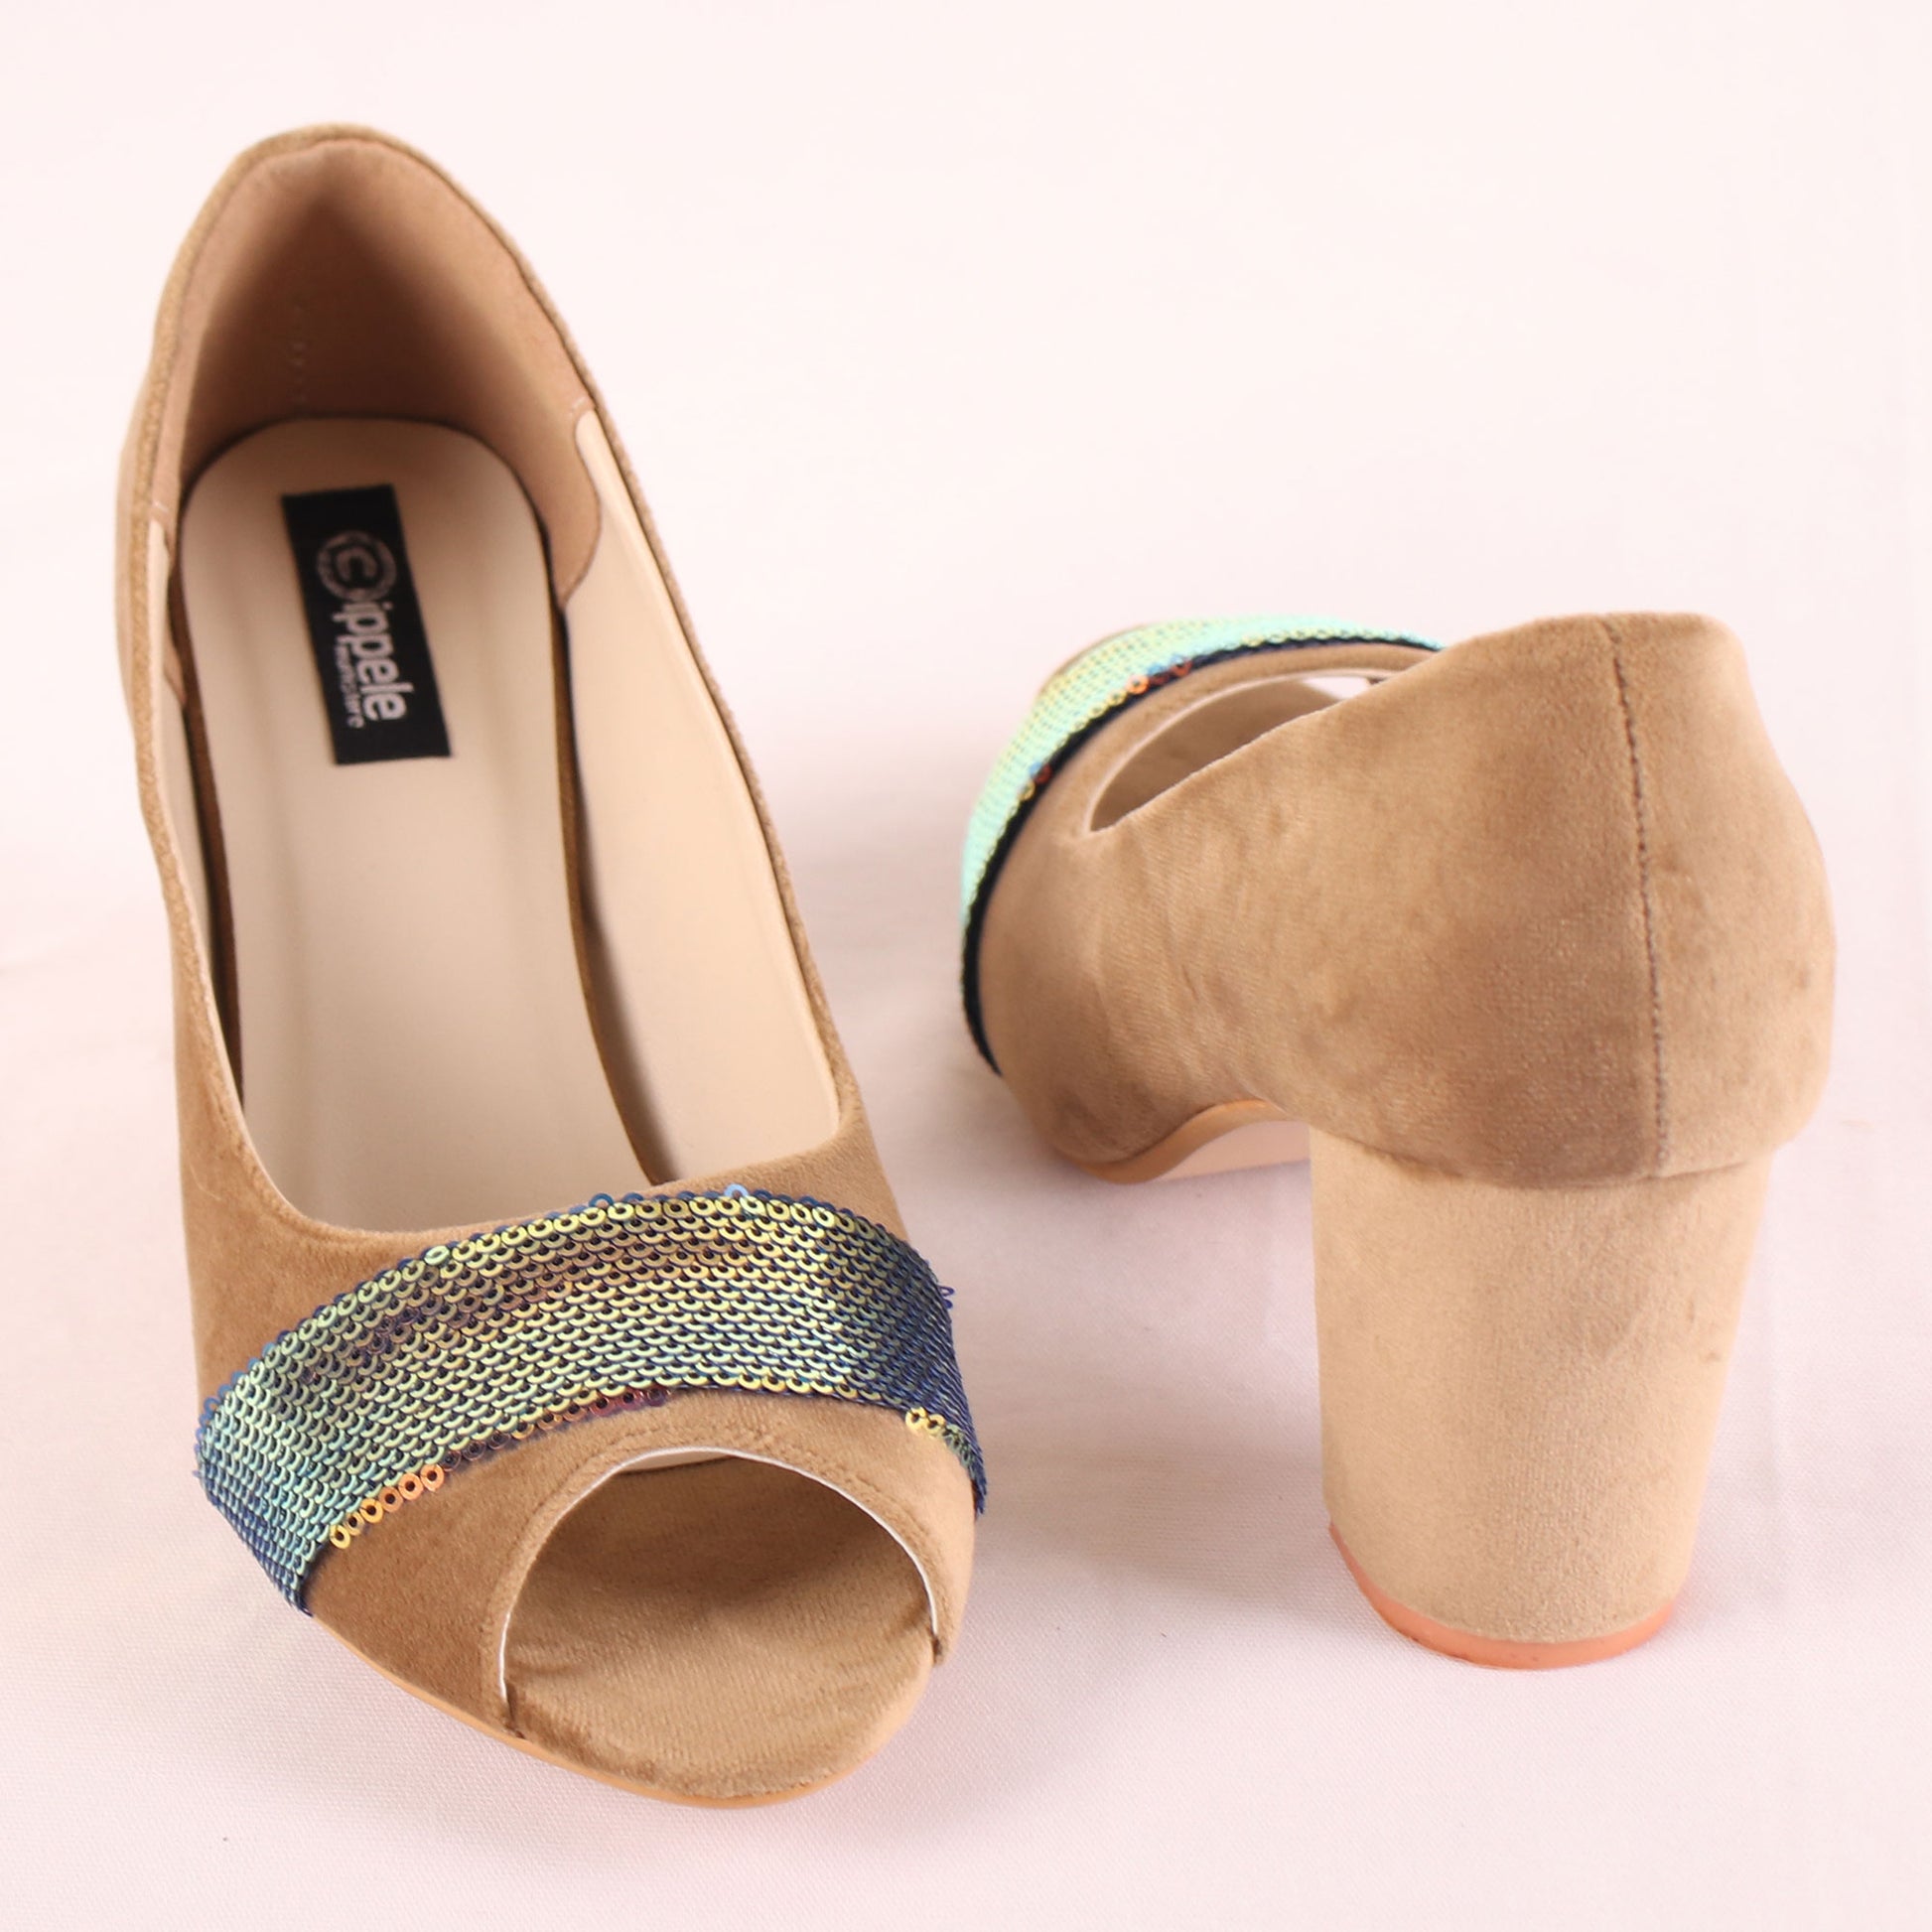 Foot Wear,The Ravishing Fillet Suede Block Heels in Beige - Cippele Multi Store